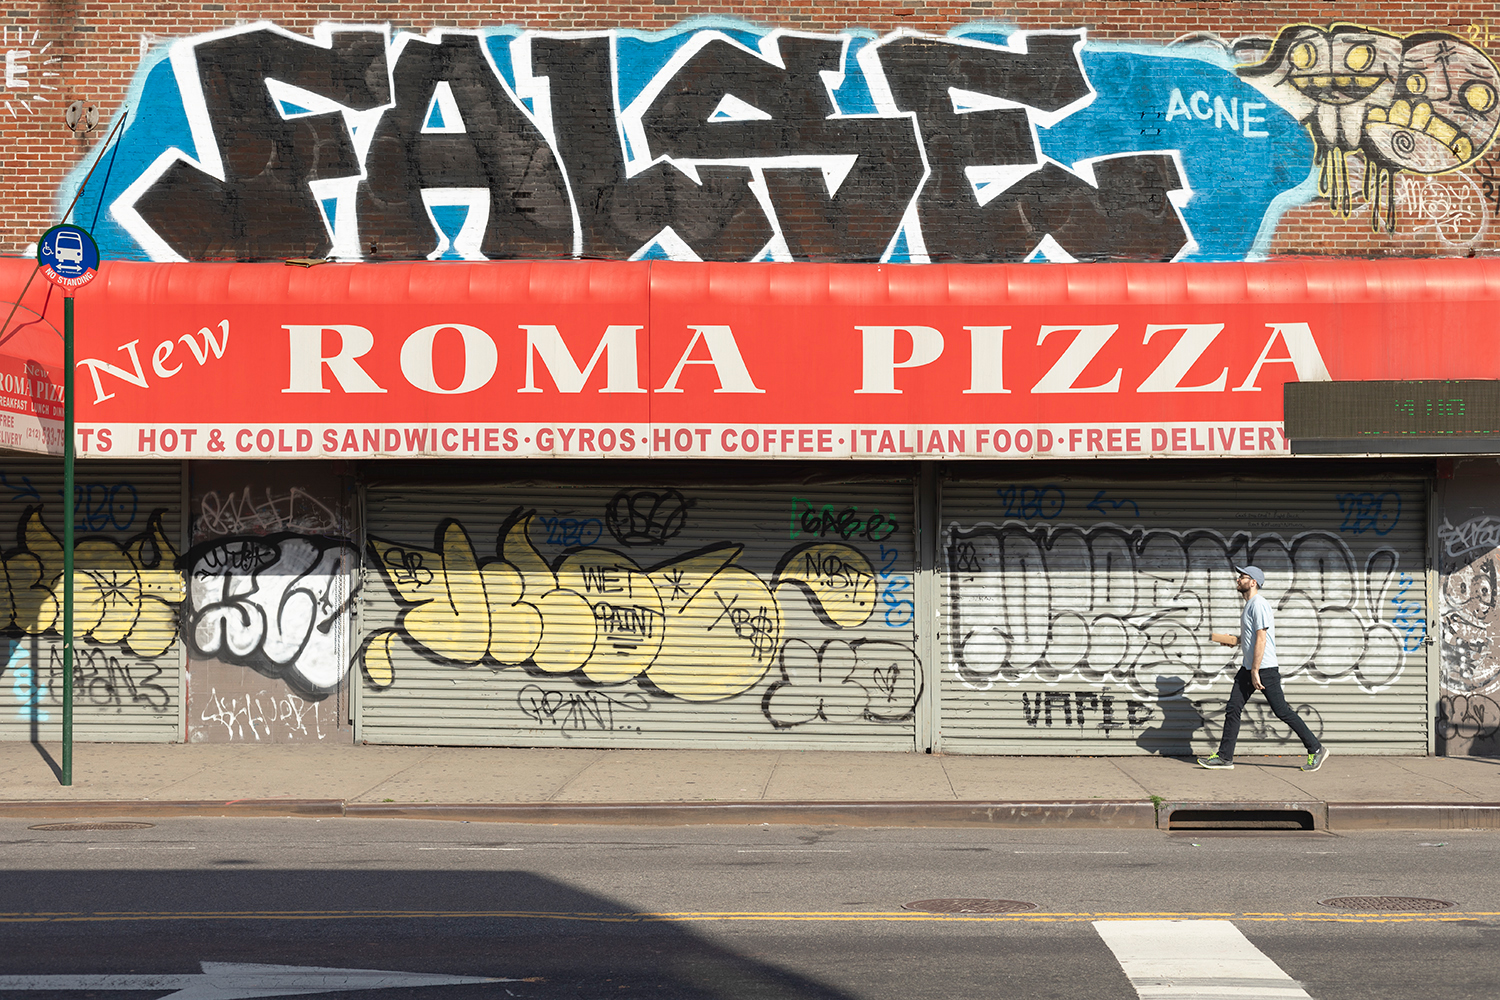  “Roma Pizza”